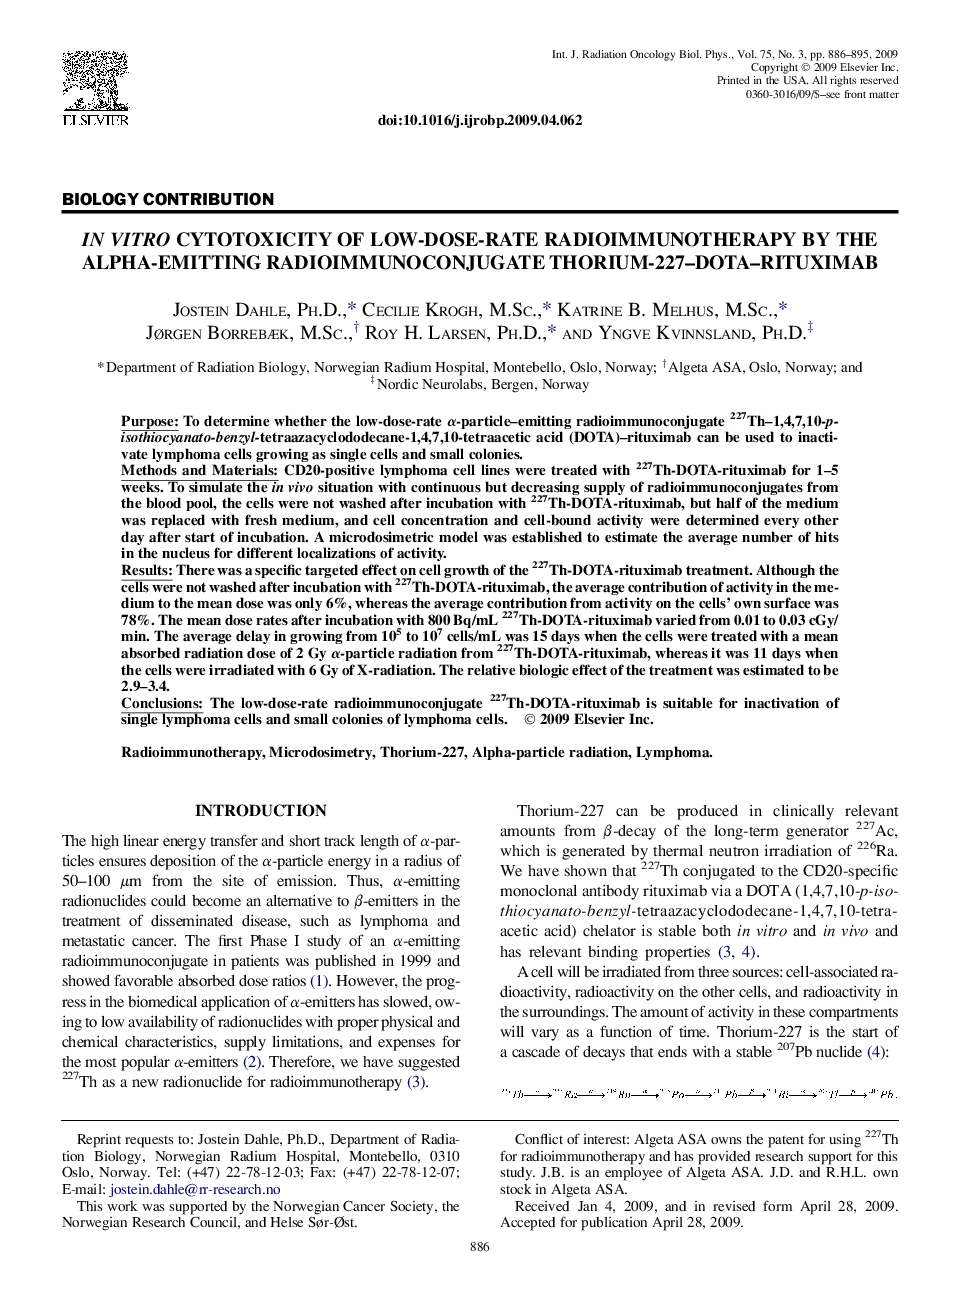 In Vitro Cytotoxicity of Low-Dose-Rate Radioimmunotherapy by the Alpha-Emitting Radioimmunoconjugate Thorium-227-DOTA-Rituximab